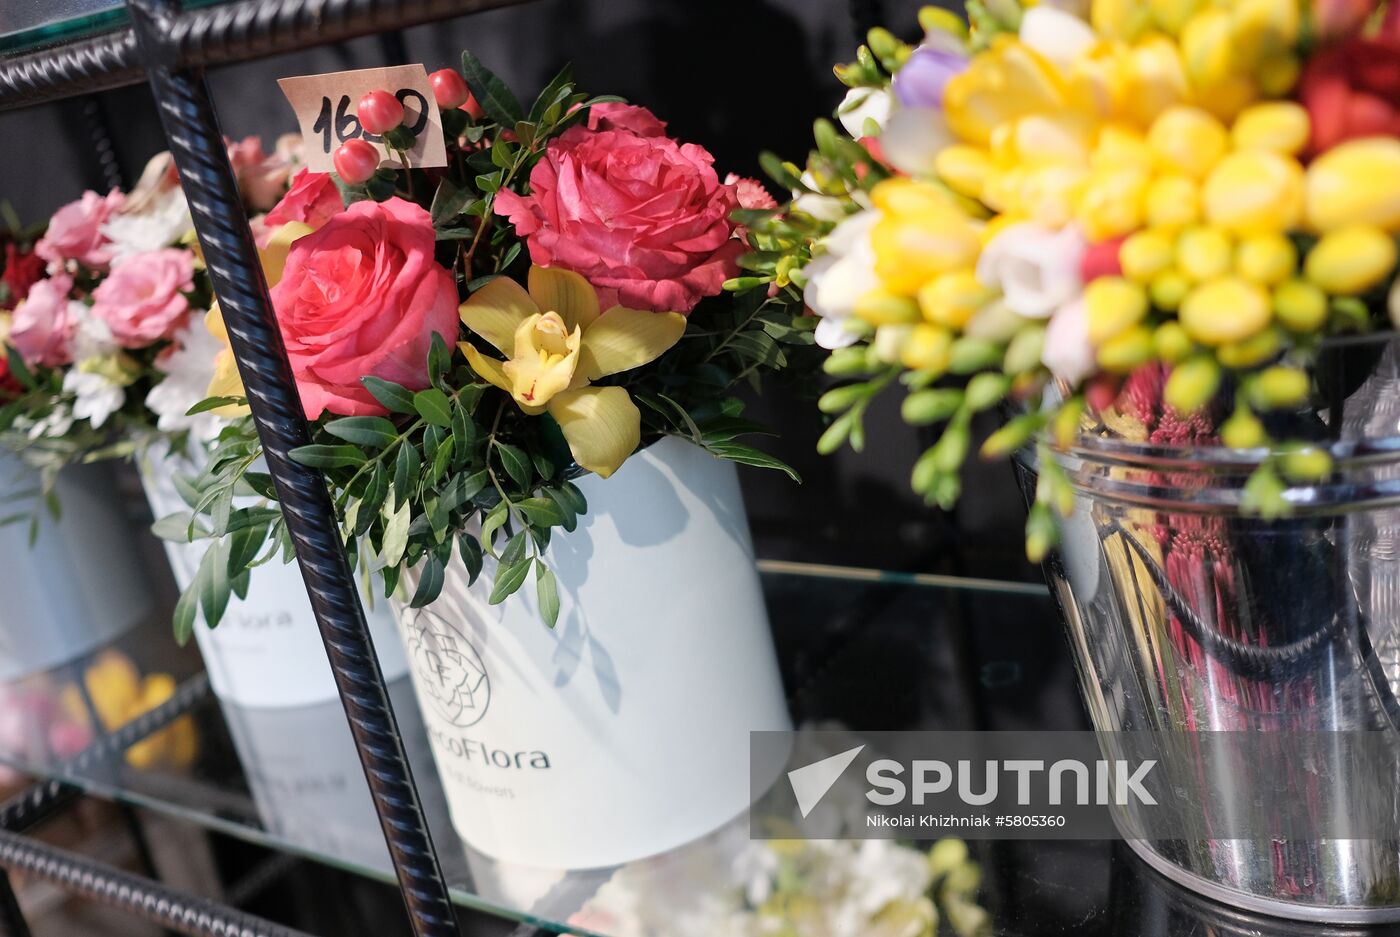 Russia Flowers On Sale